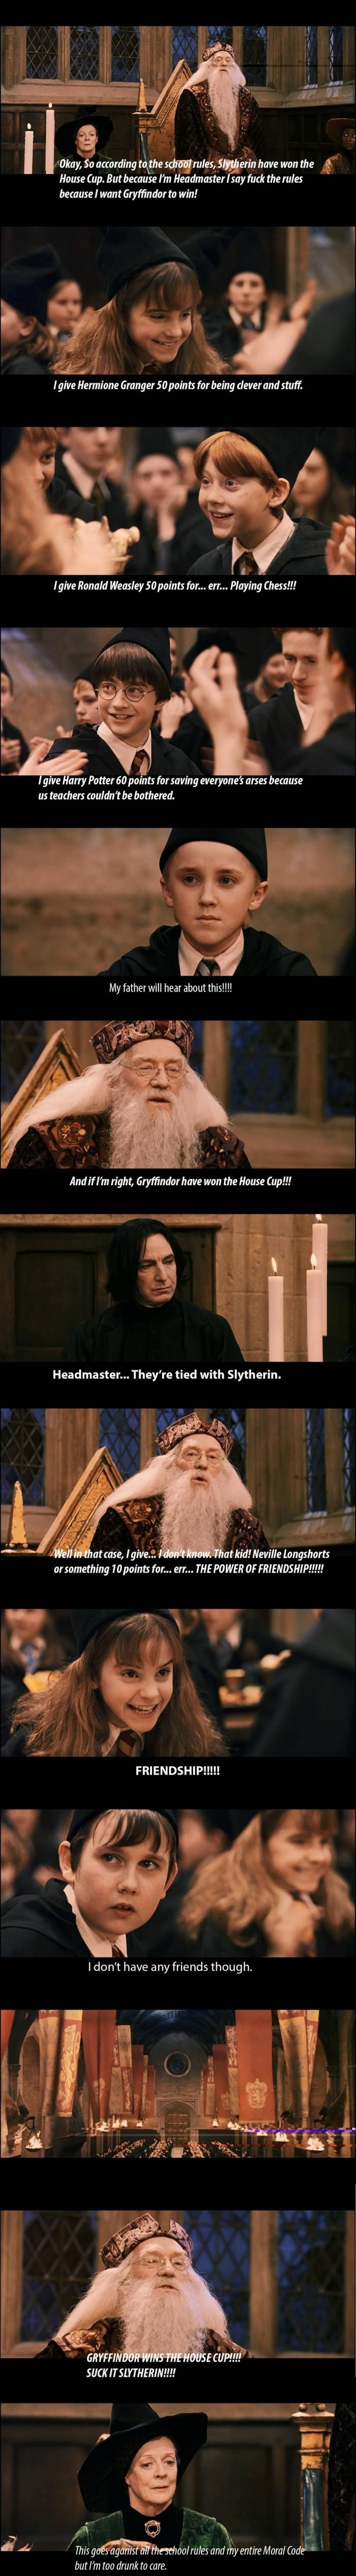 Dumbledore & house points